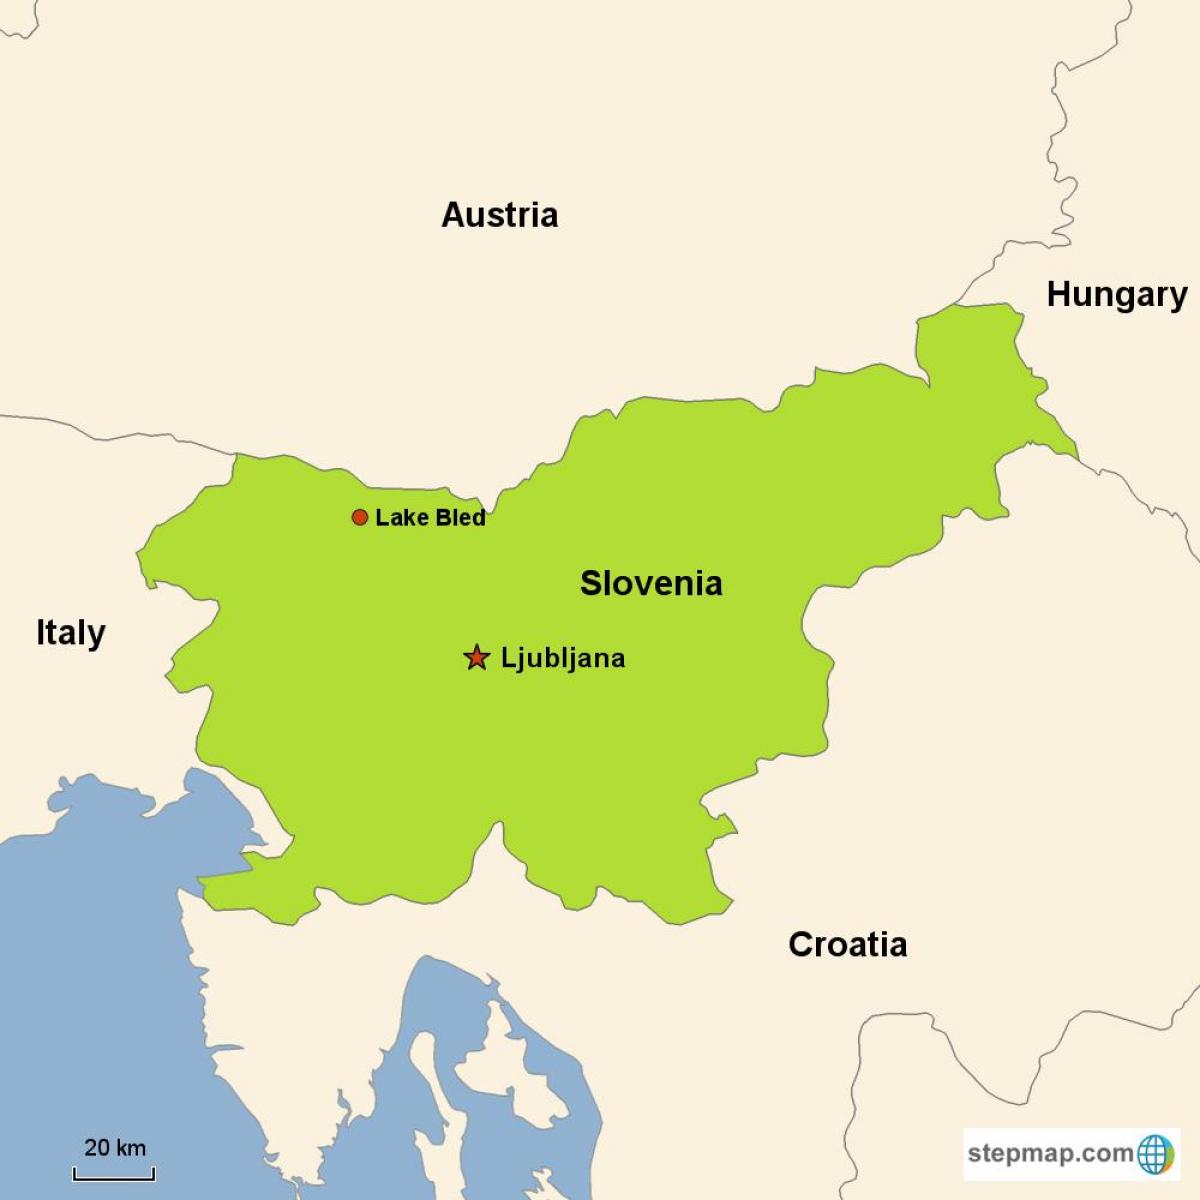 Karta Ljubljana Slovenija